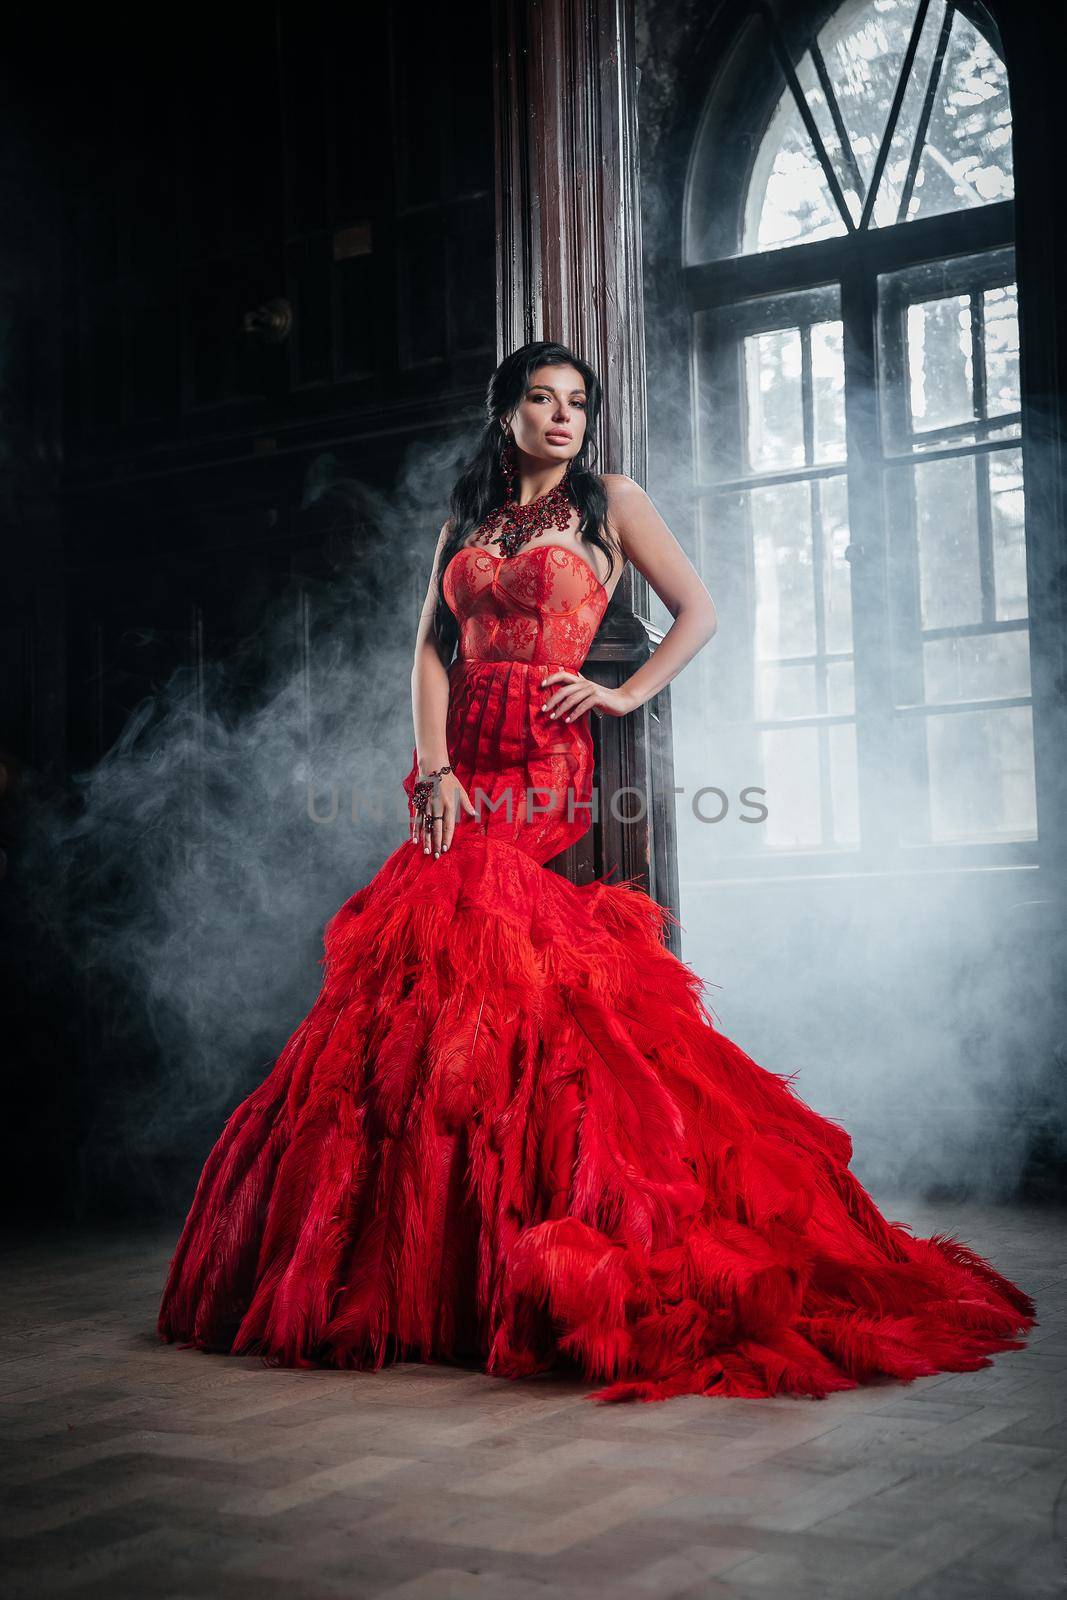 Woman Vintage Red Dress Old Castle Beautiful Princess In Seductive Dress Elegant Caucasian Female Fairy Tale story Near Big Window With Smoke Fog